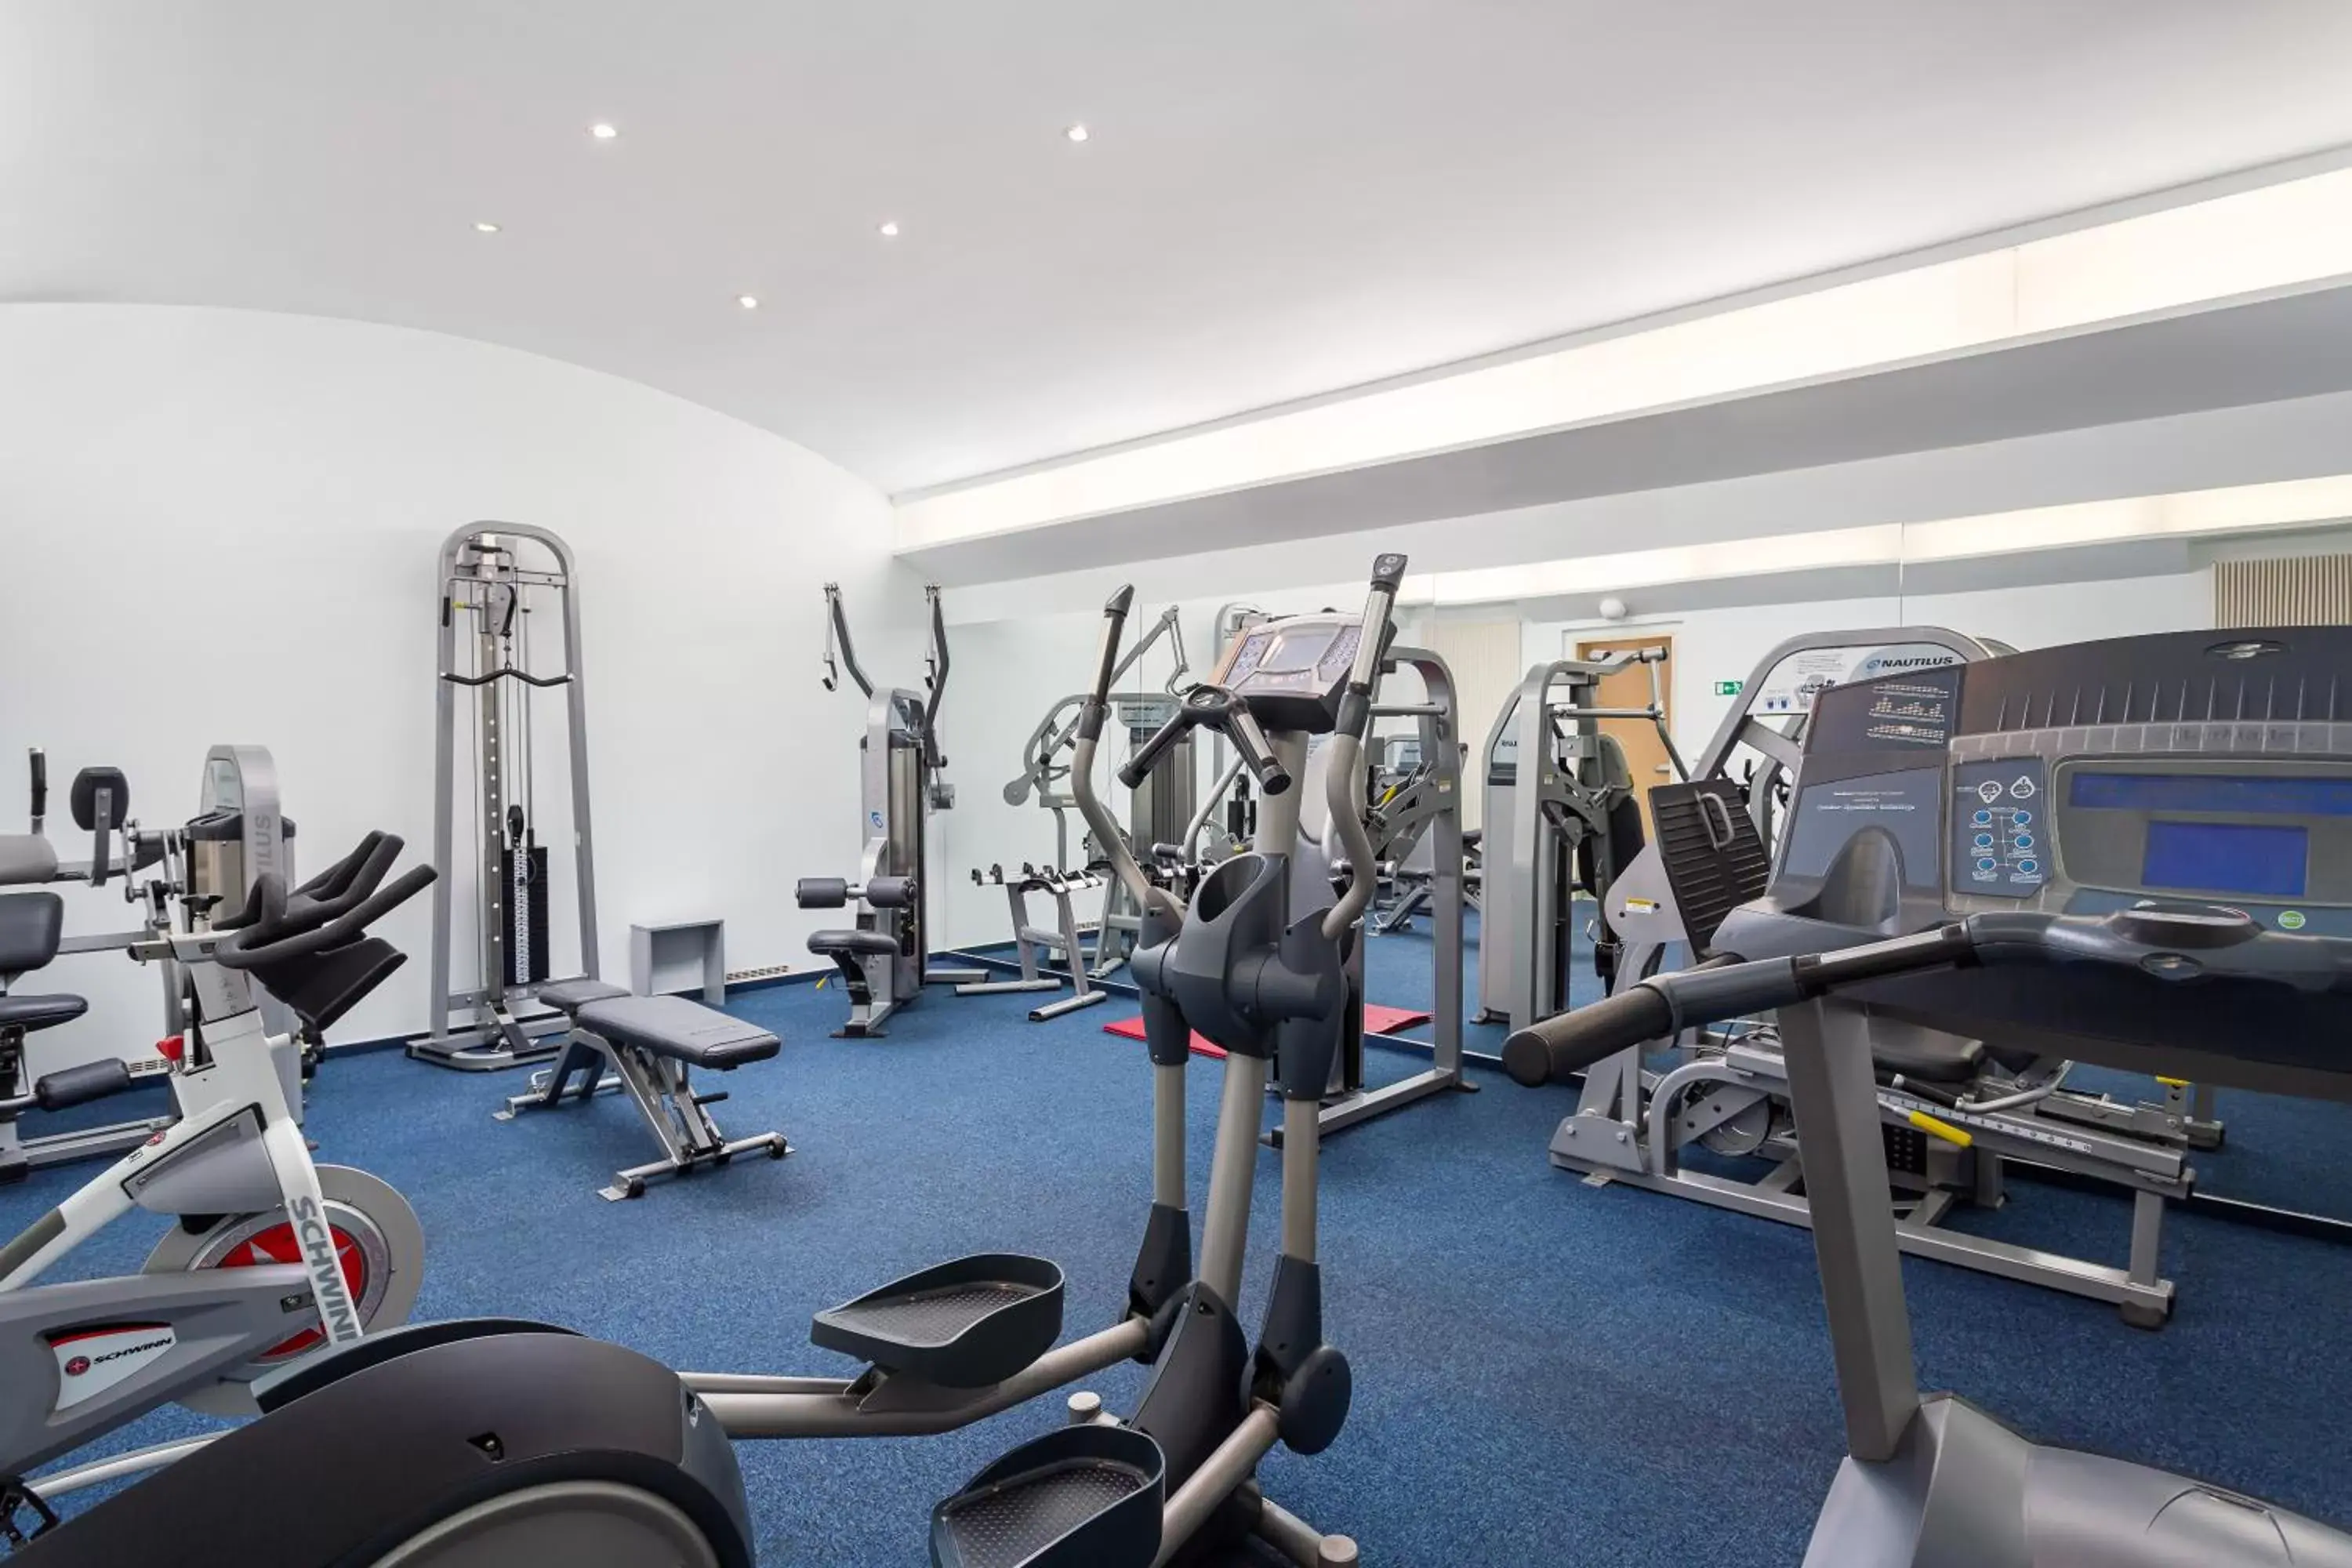 Fitness centre/facilities, Fitness Center/Facilities in Hotel Paris Prague